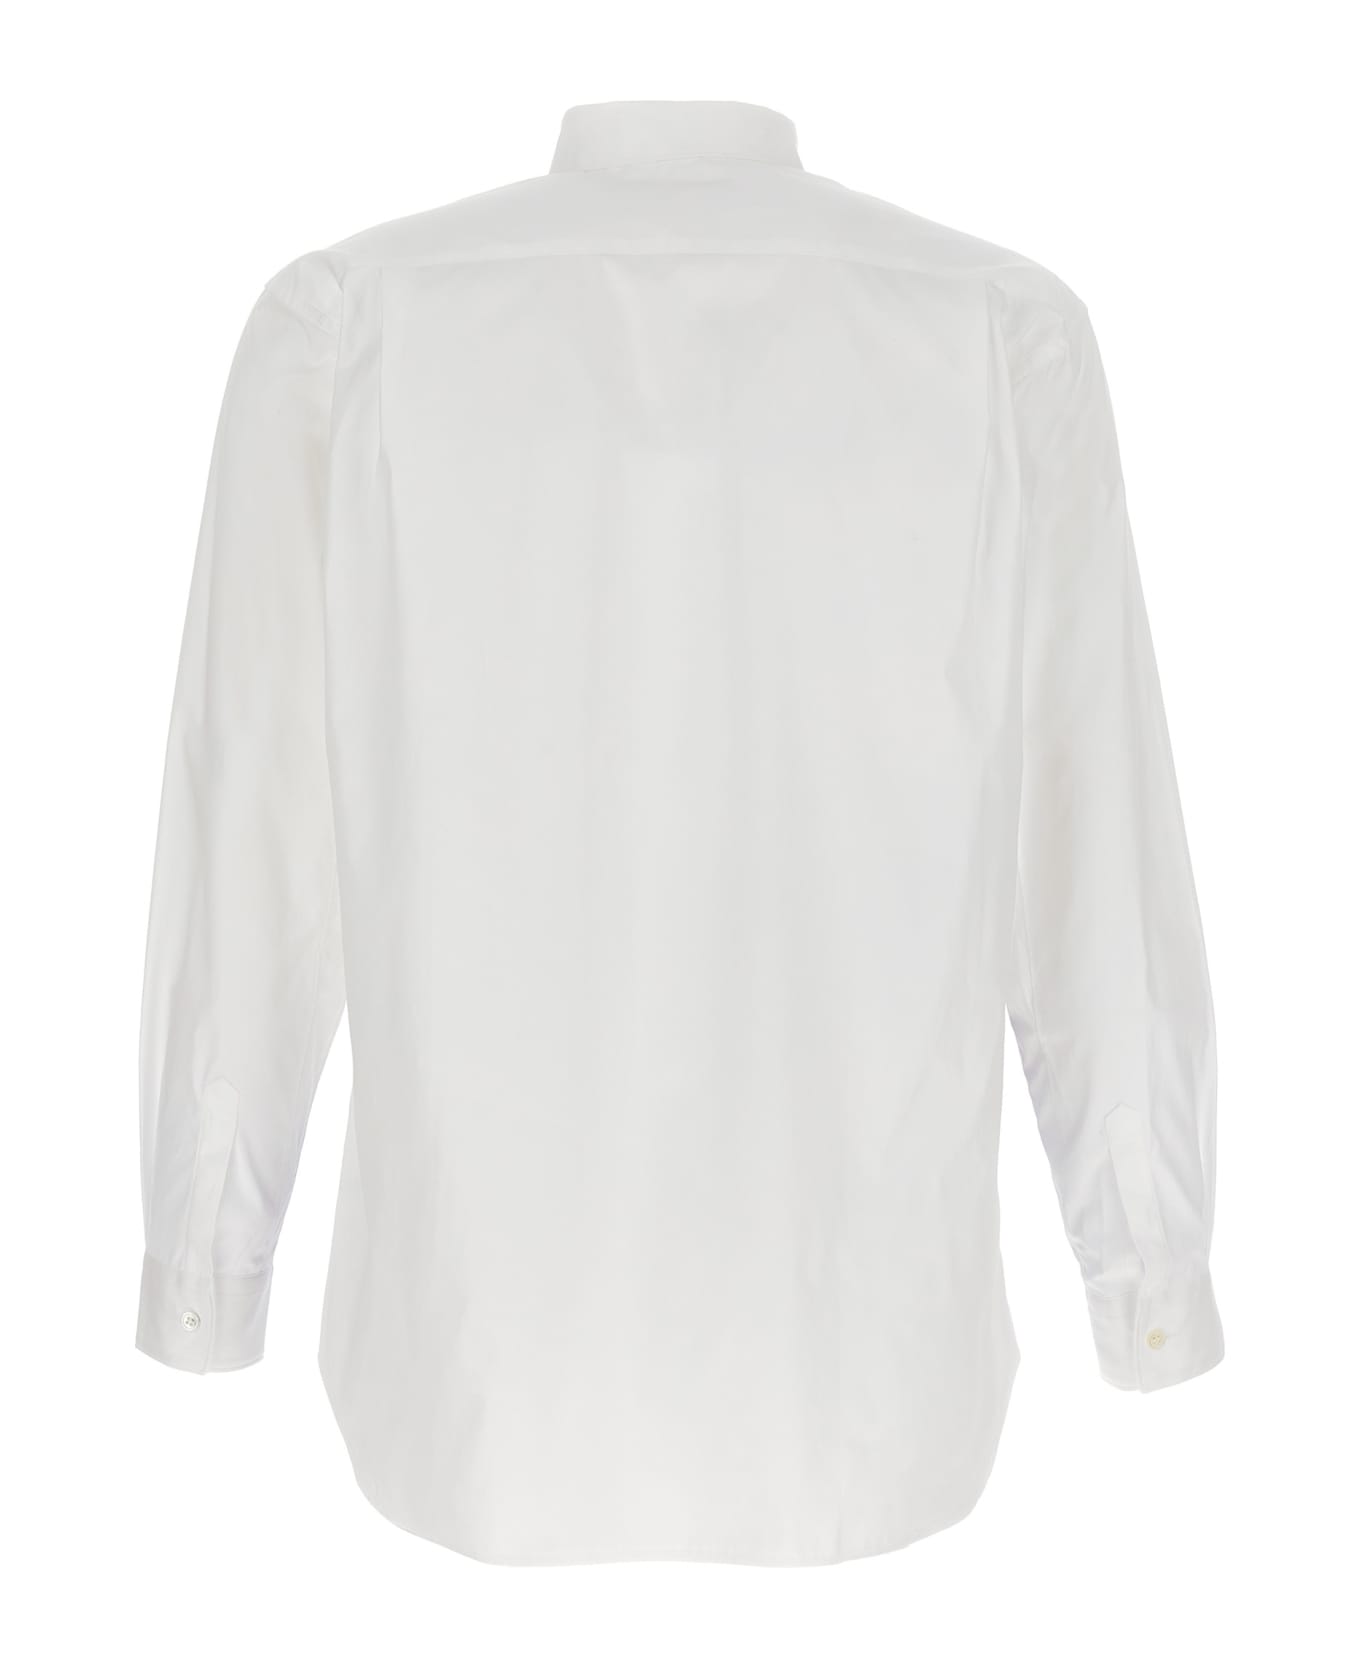 Comme des Garçons Shirt Patterned Square Shirt - White シャツ